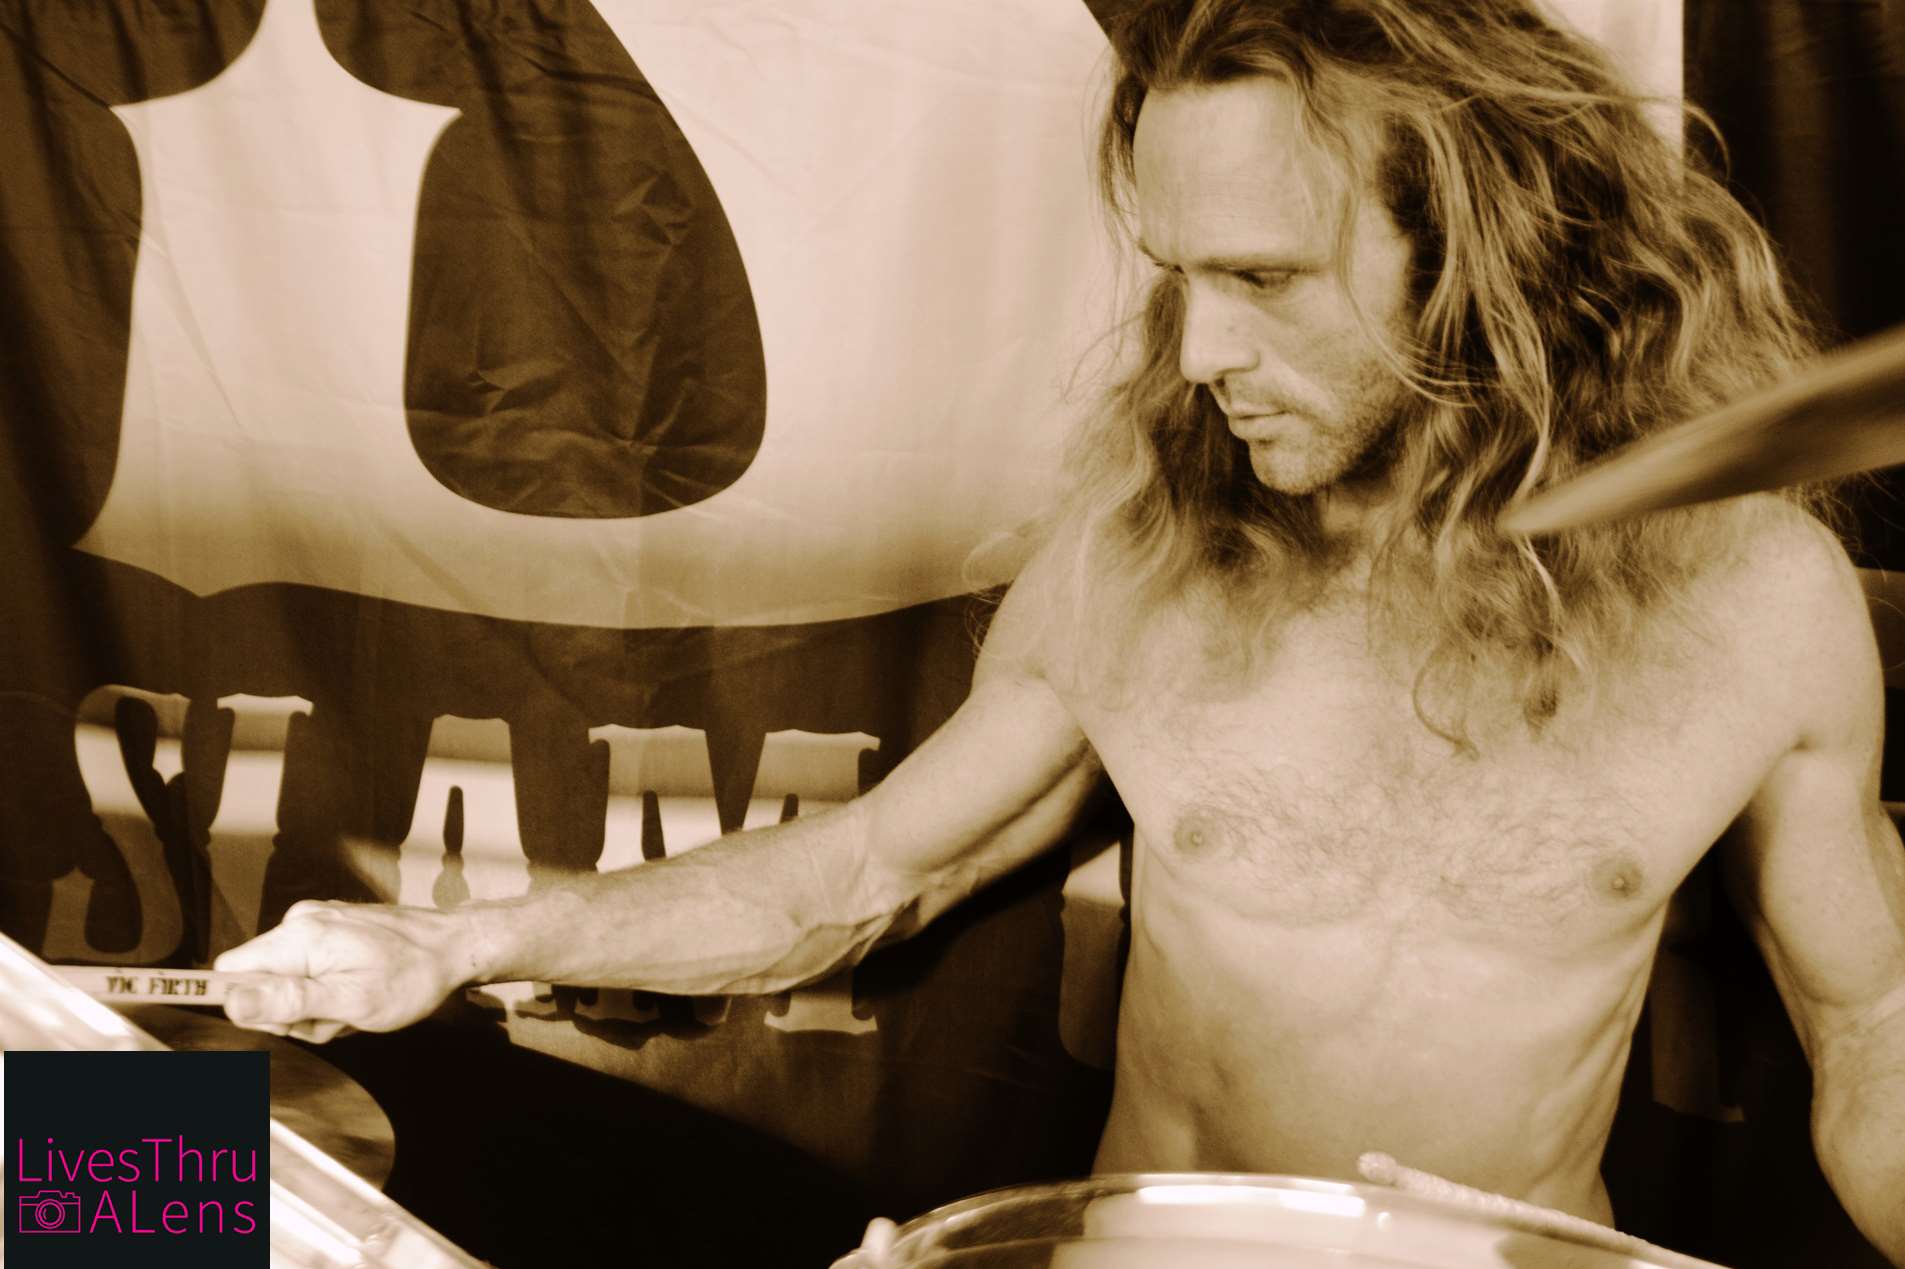 Steve Campkin, drummer in Slam Cartel